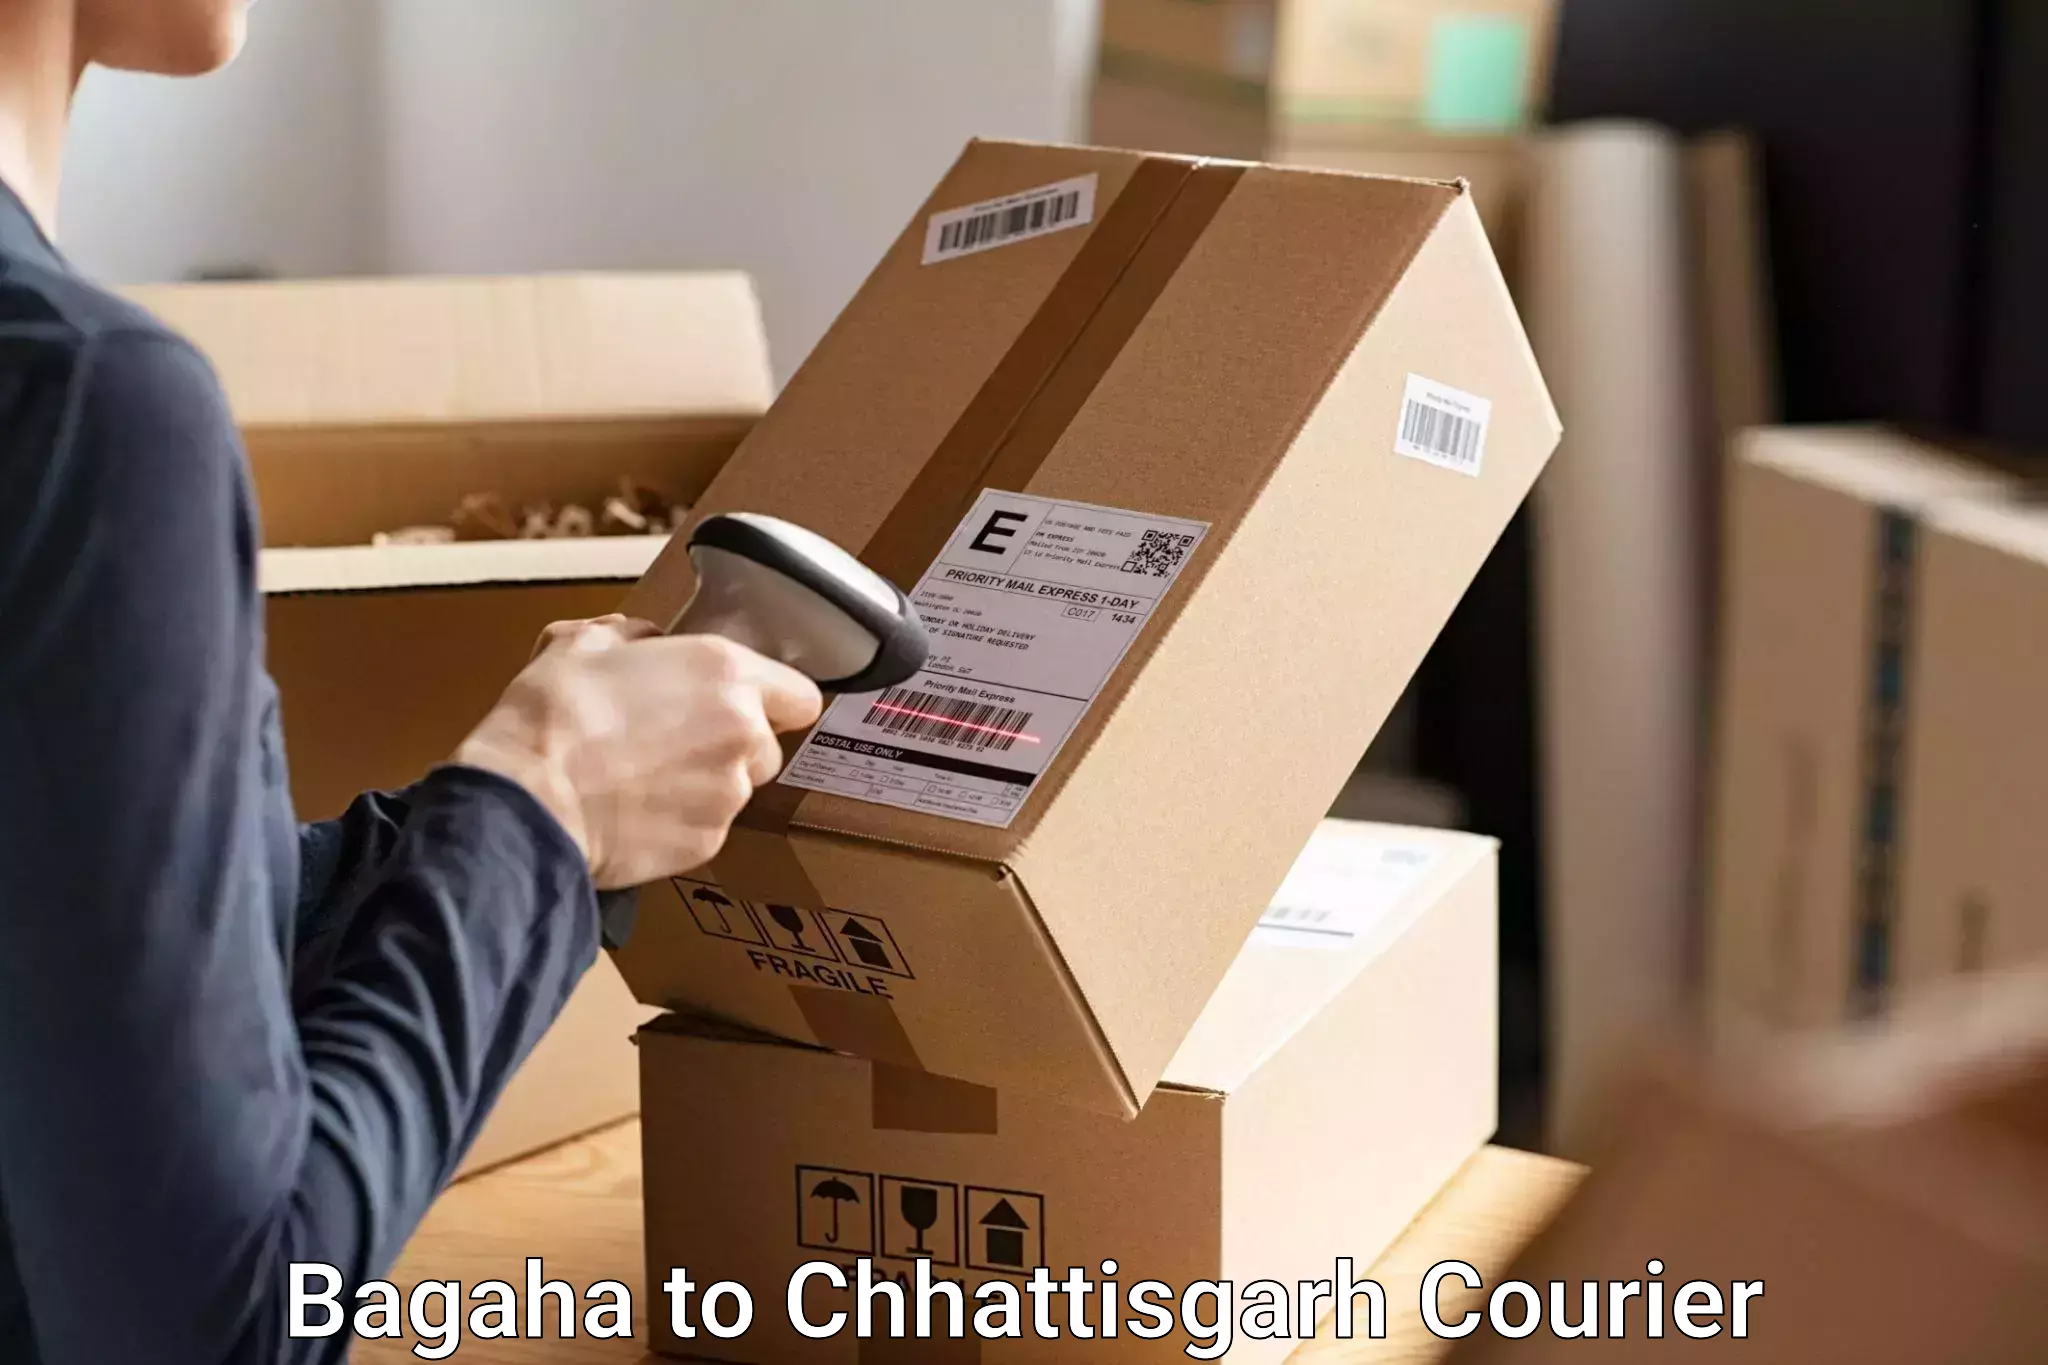 Luggage shipment specialists Bagaha to Korea Chhattisgarh